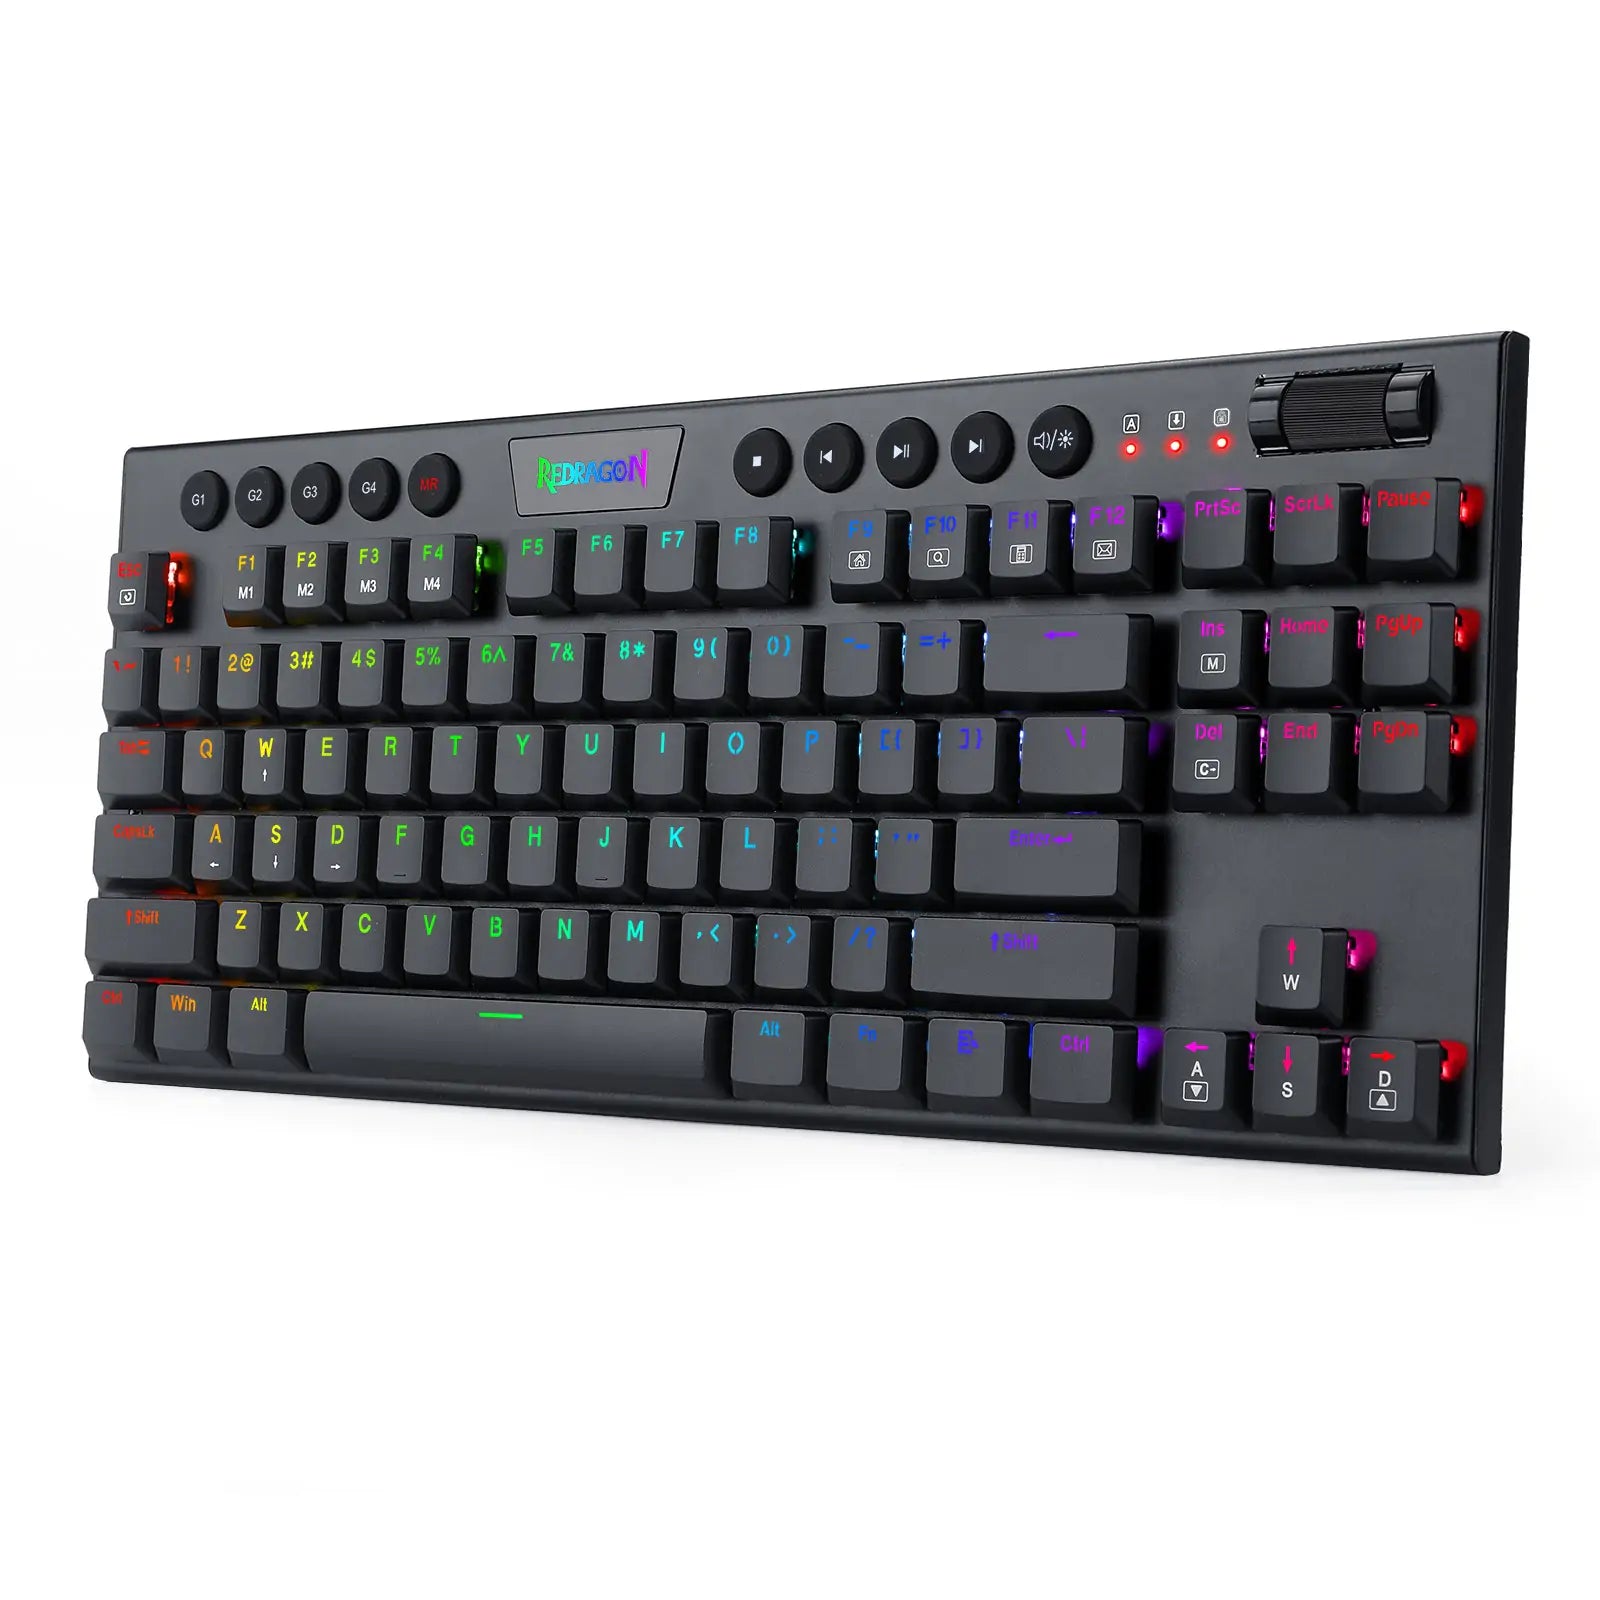 Redragon K622 Horus TKL RGB Mechanical Keyboard, Ultra-Thin Designed Wired Gaming Keyboard w/Low Profile Keycaps, Dedicated Media Control